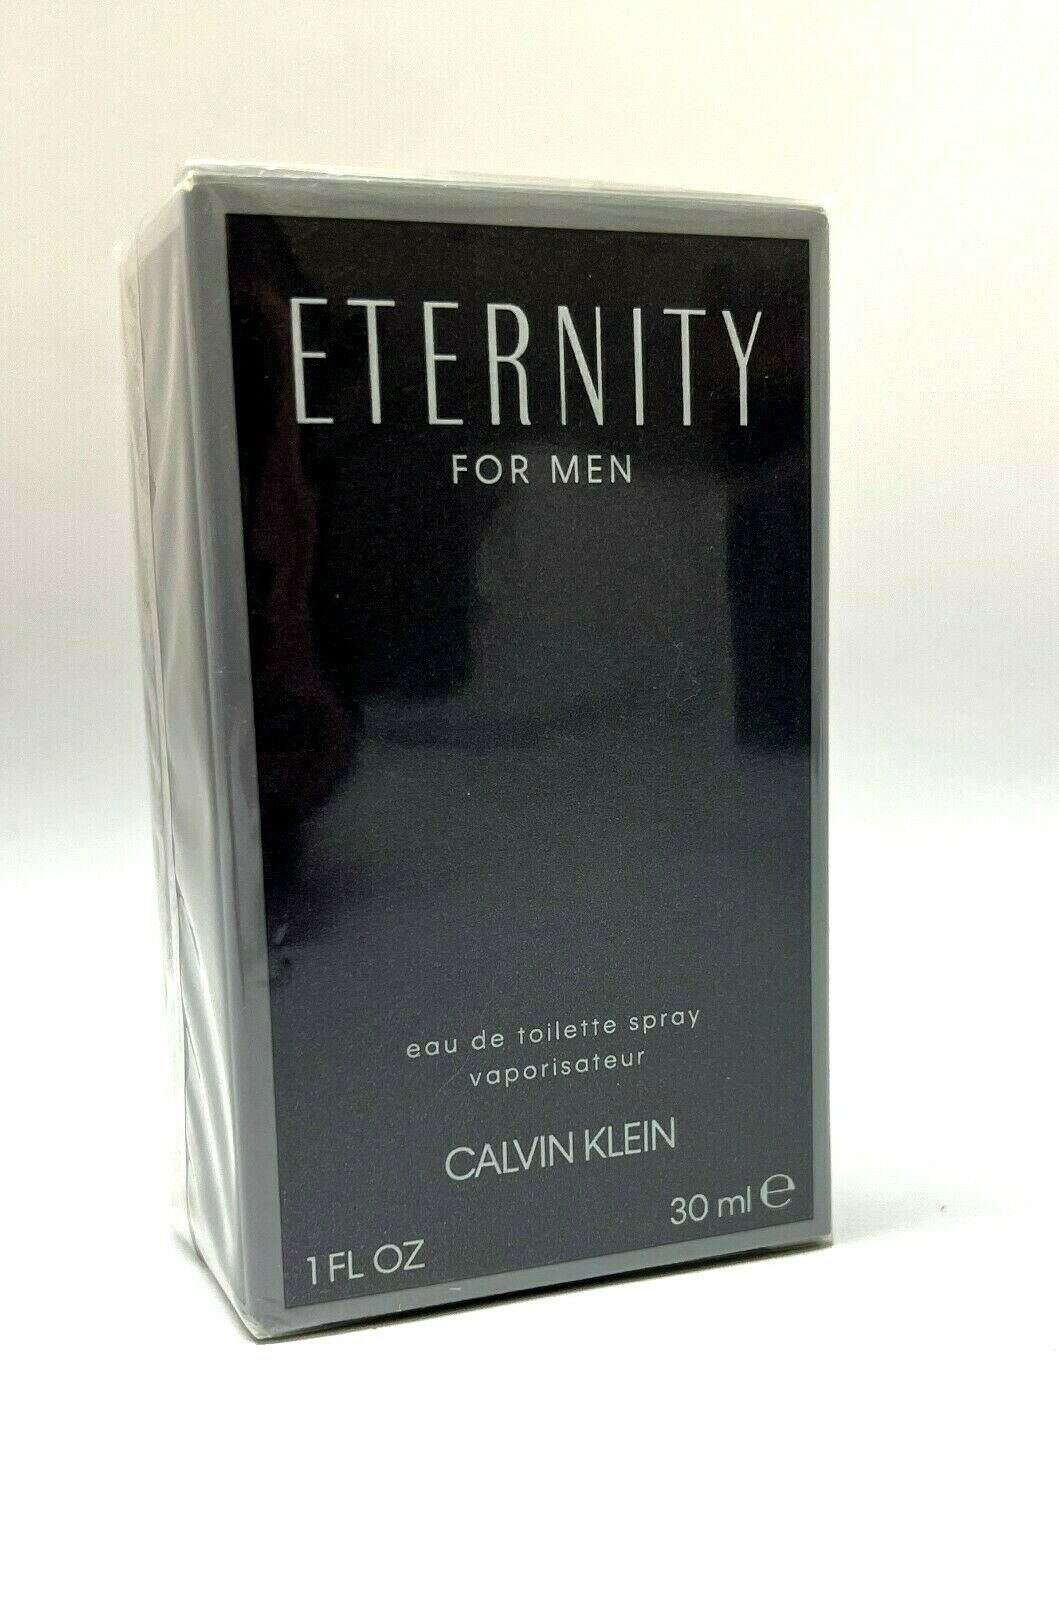 Eternity for Men by Calvin Klein 1 oz